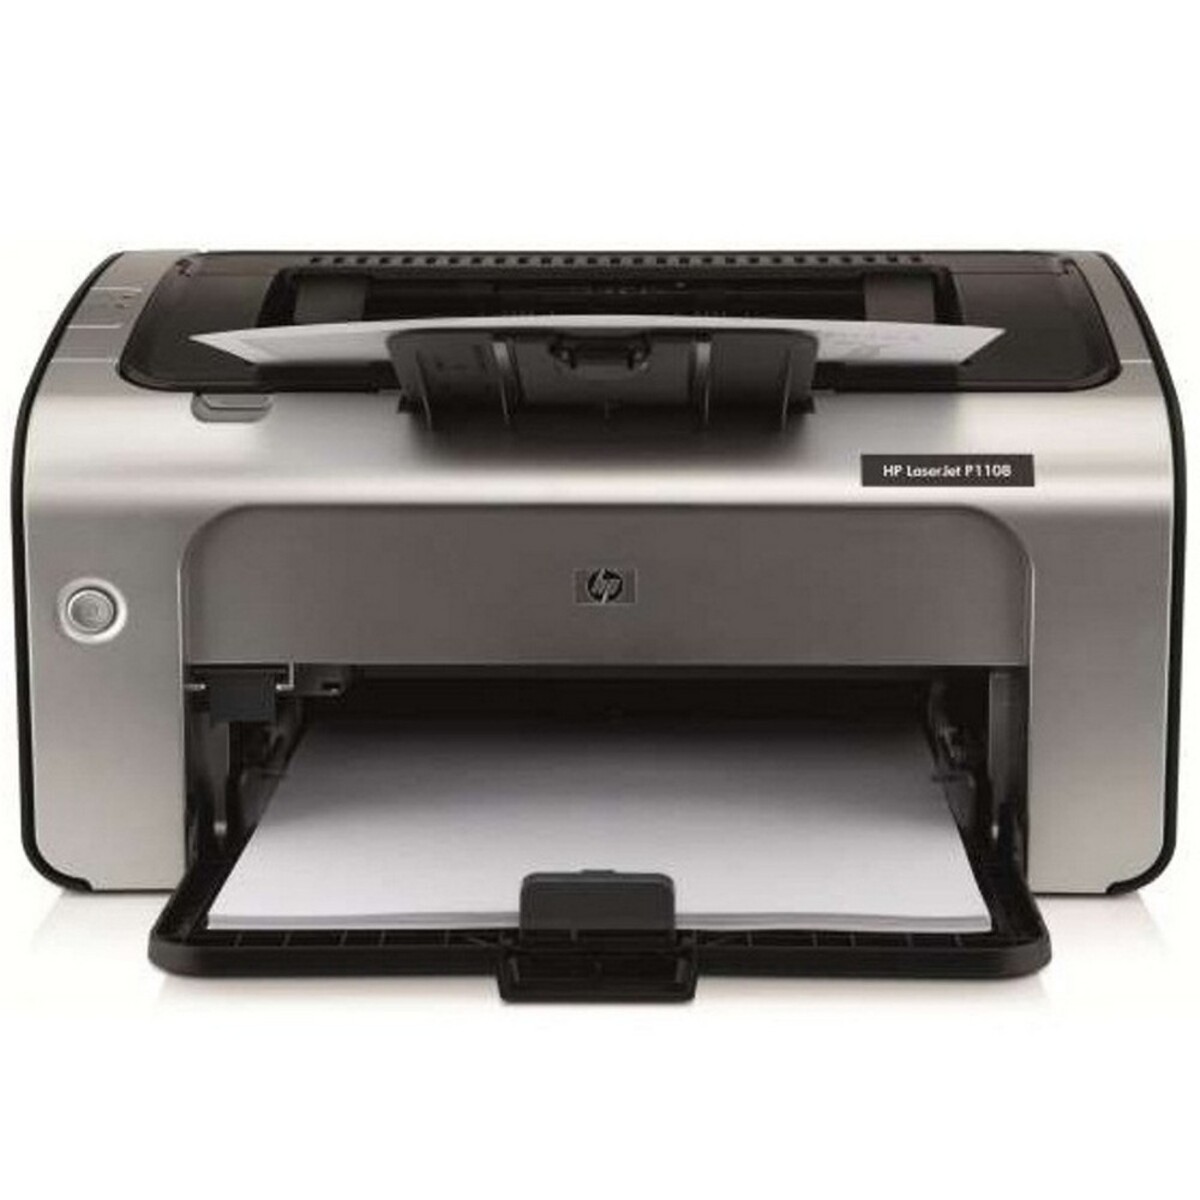 HP LaserJet Printer Pro P1108